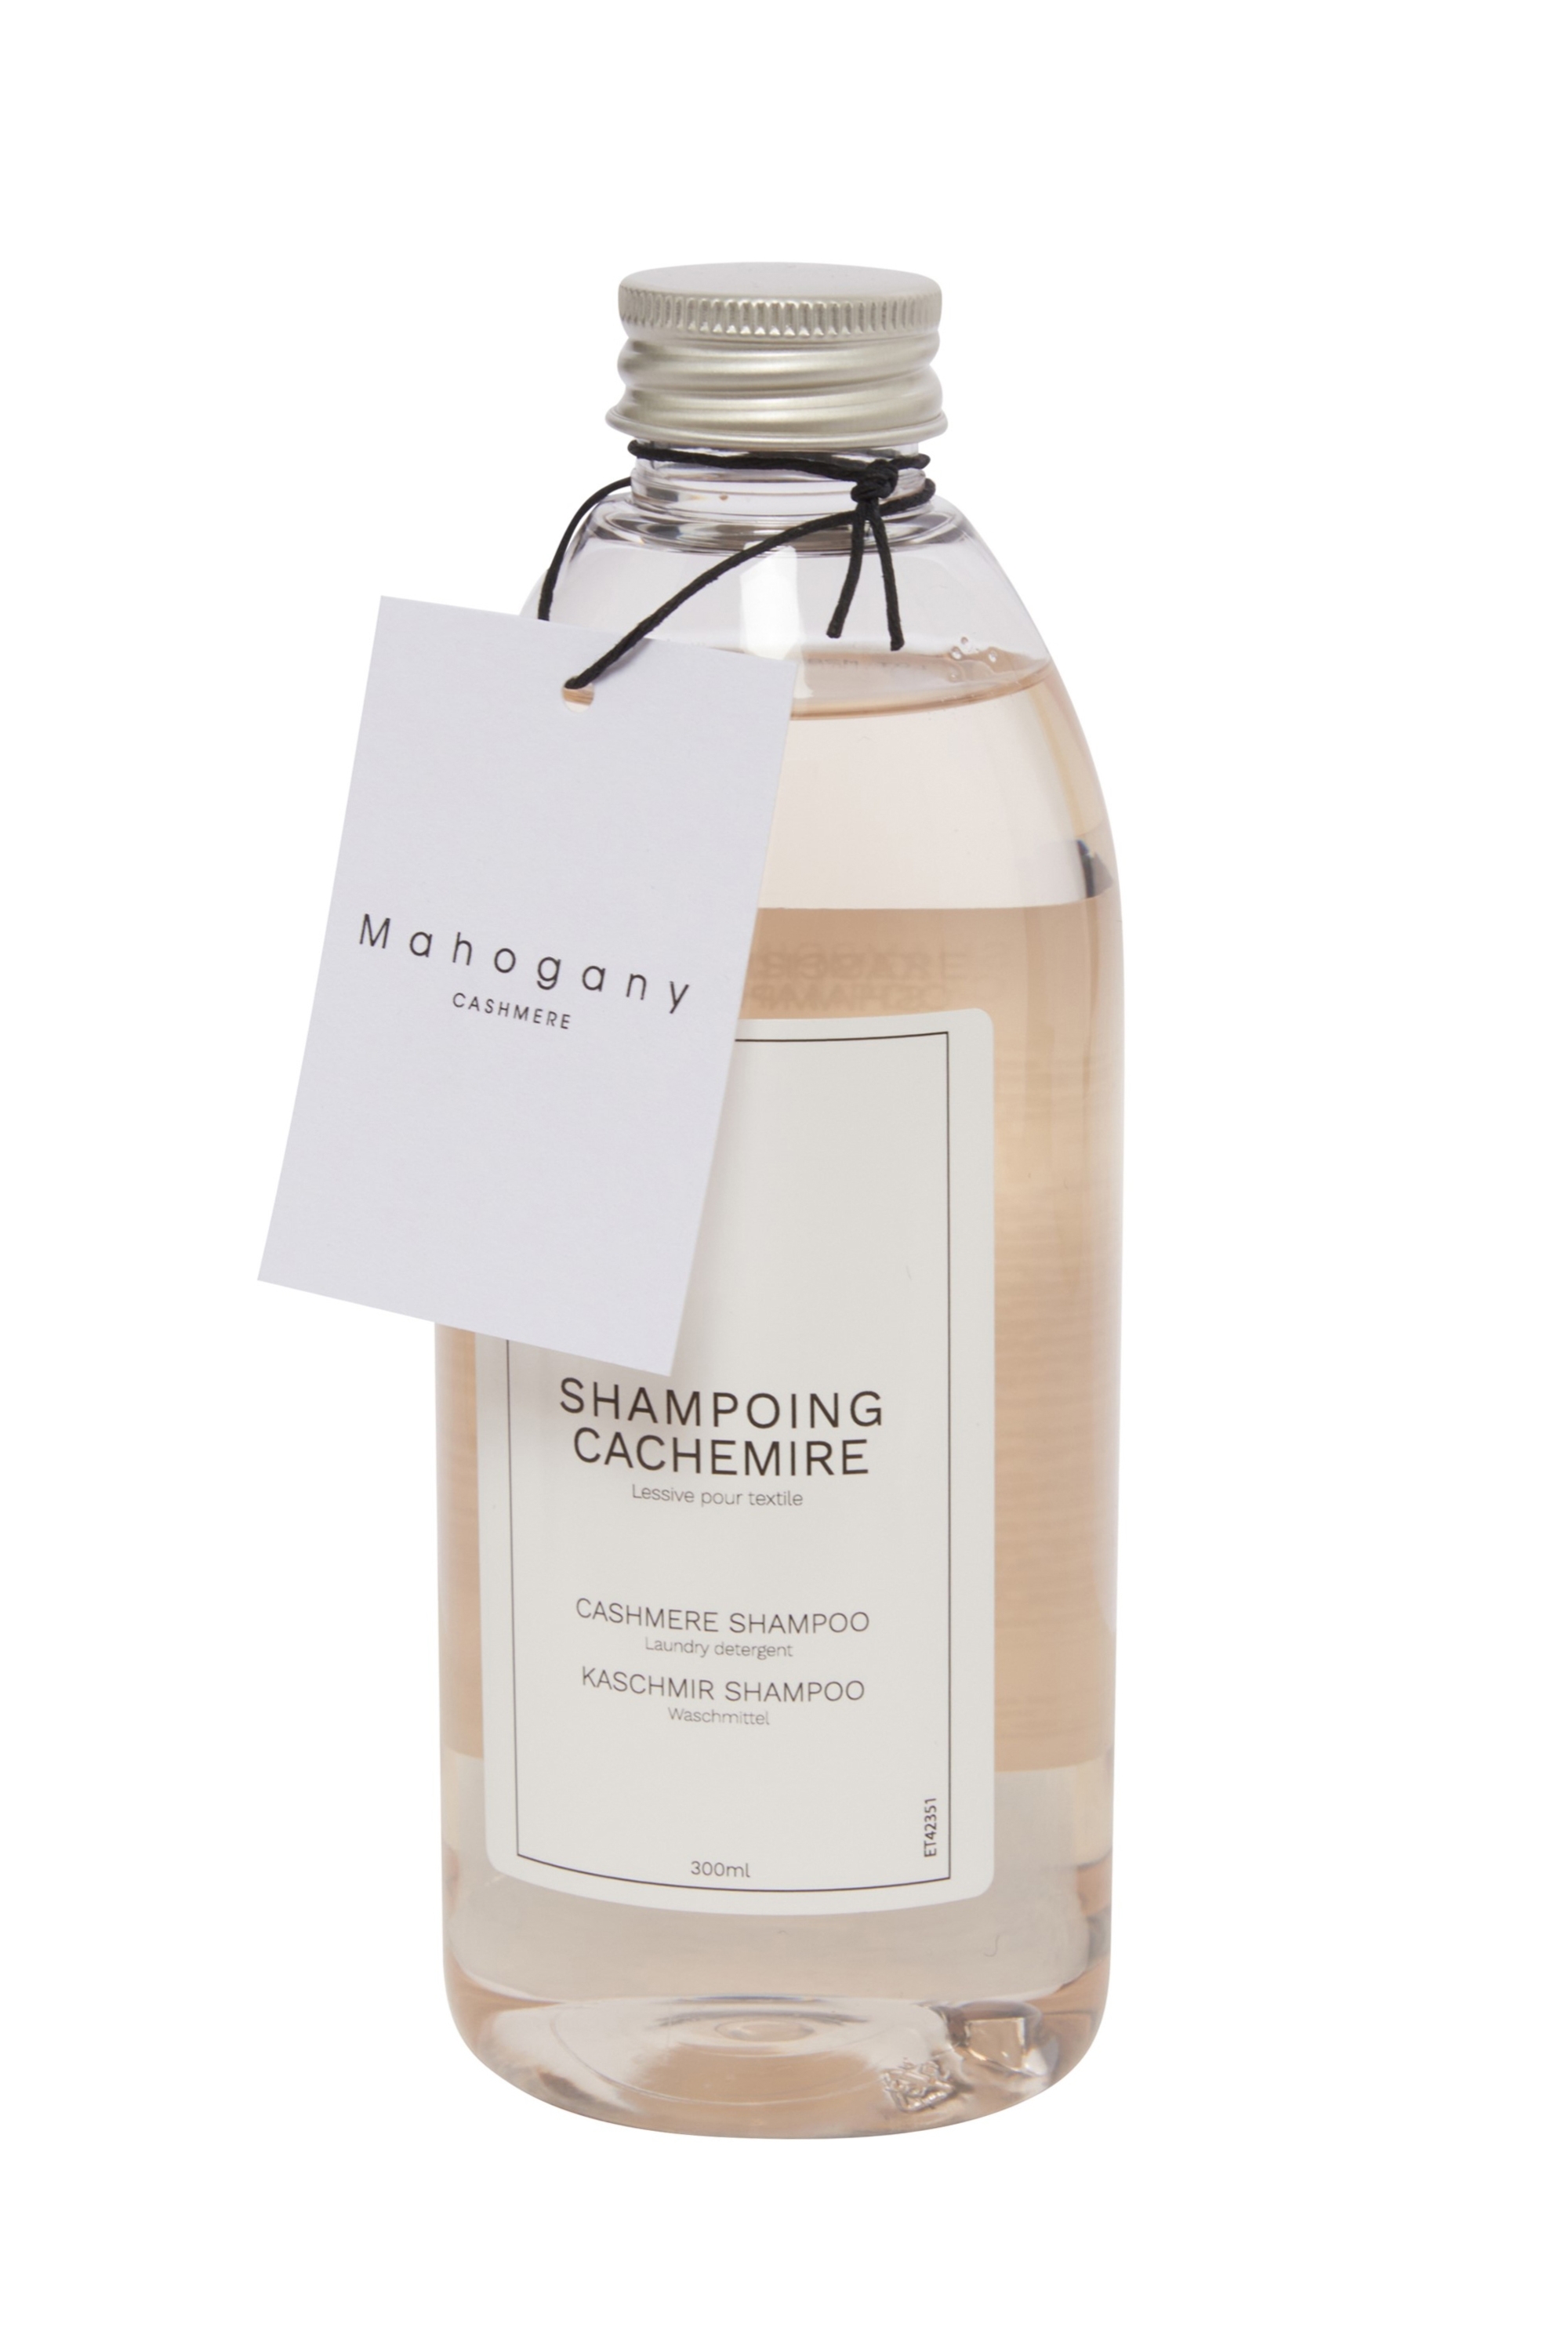 Shampoo accessoires cashmere shampoo natural einheitsgrouml sze